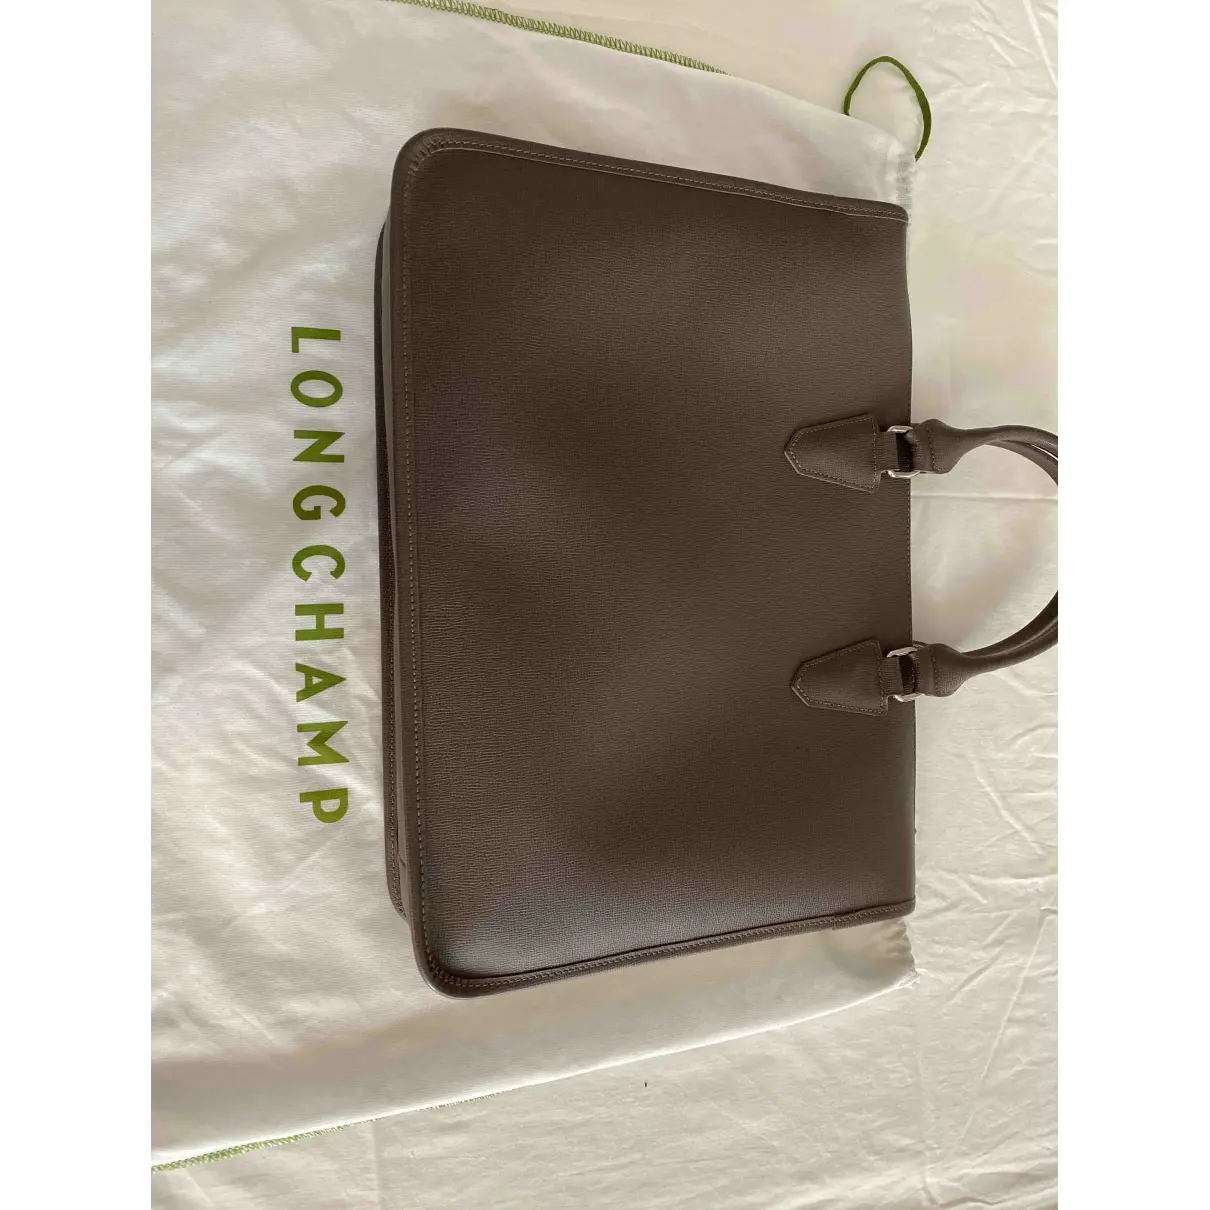 Buy Longchamp Leather satchel online